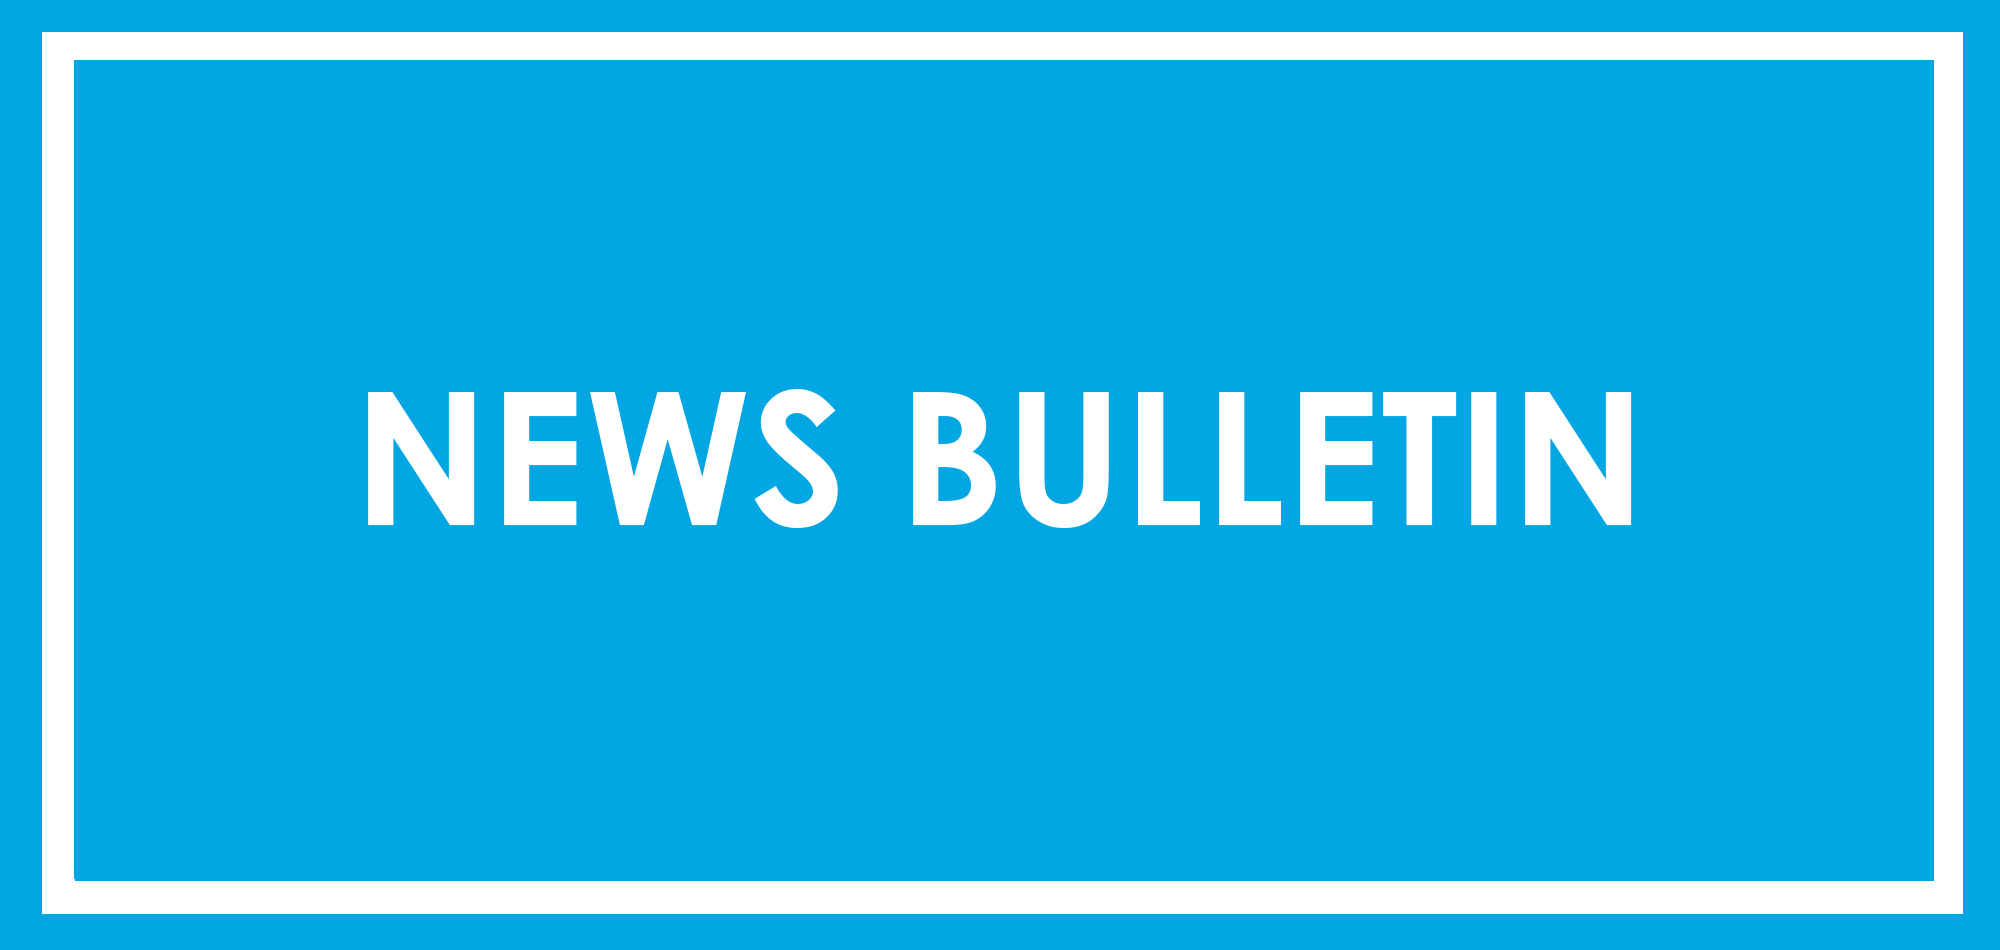 News Bulletin - 09.09.20